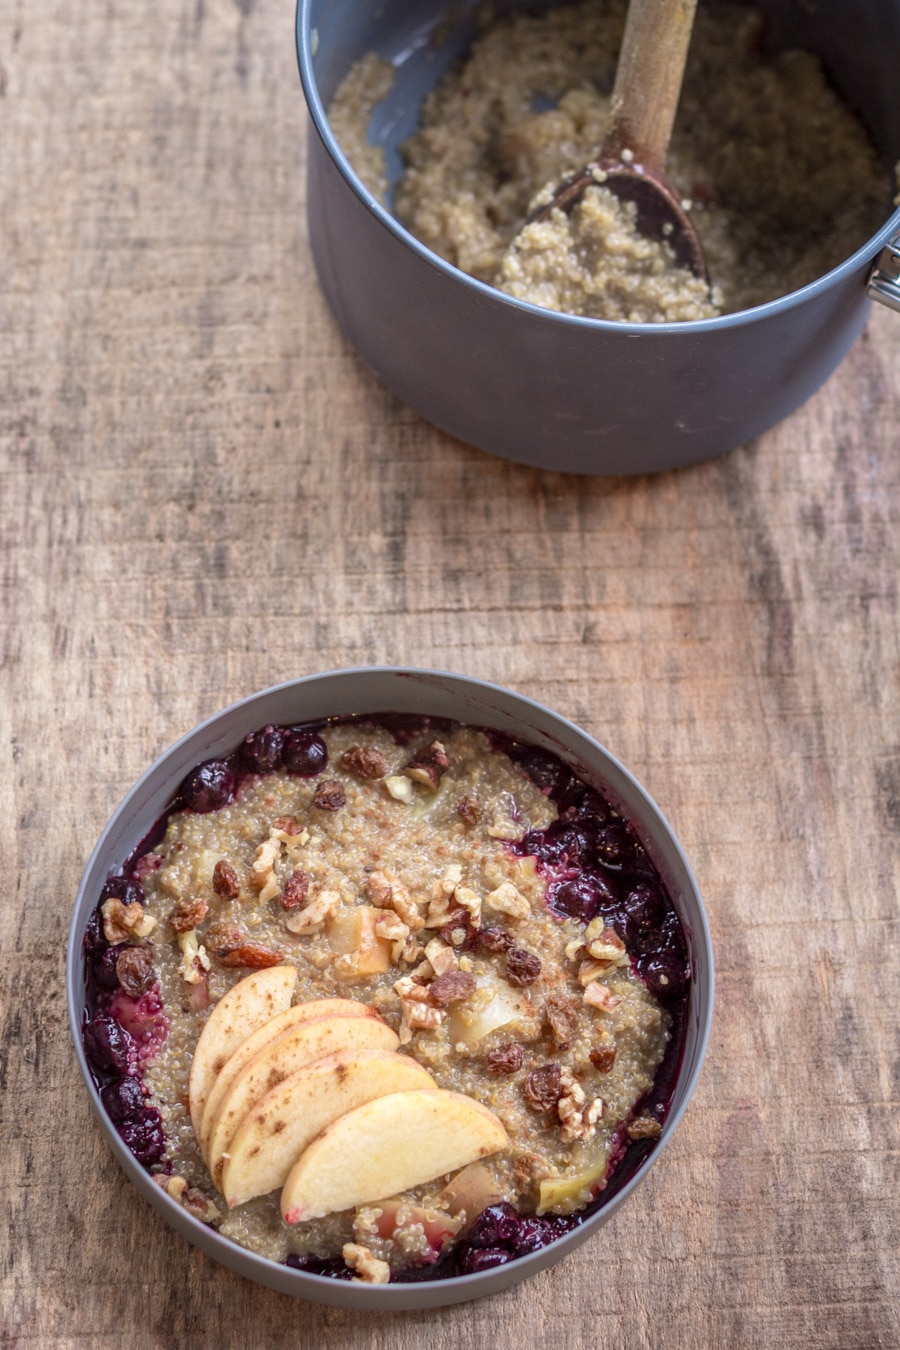 A bowl of quinoa porridge on a wooden surface.